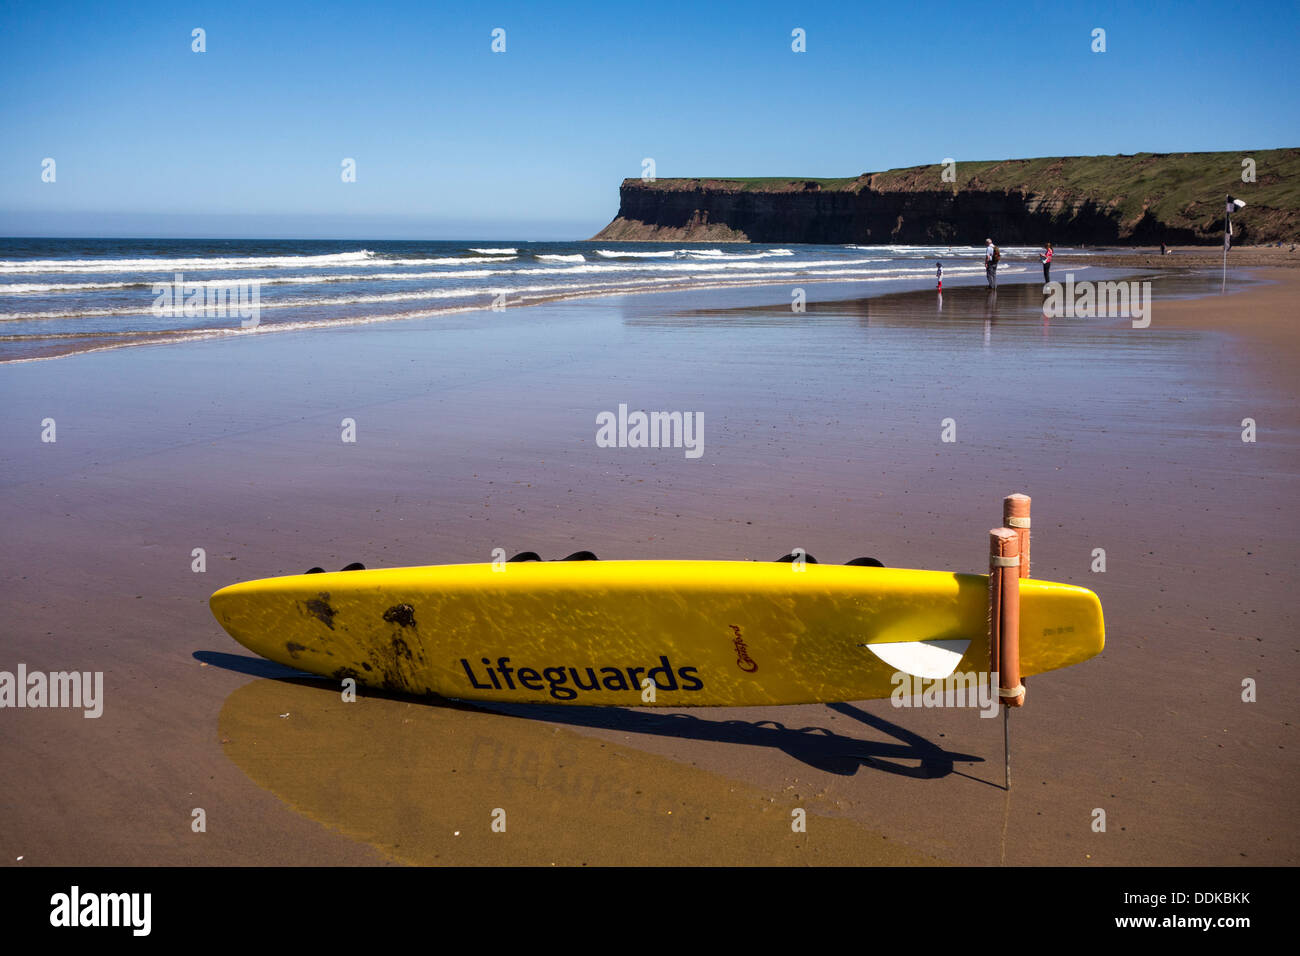 Lifeguards surf board, The beach, Saltburn Stock Photo